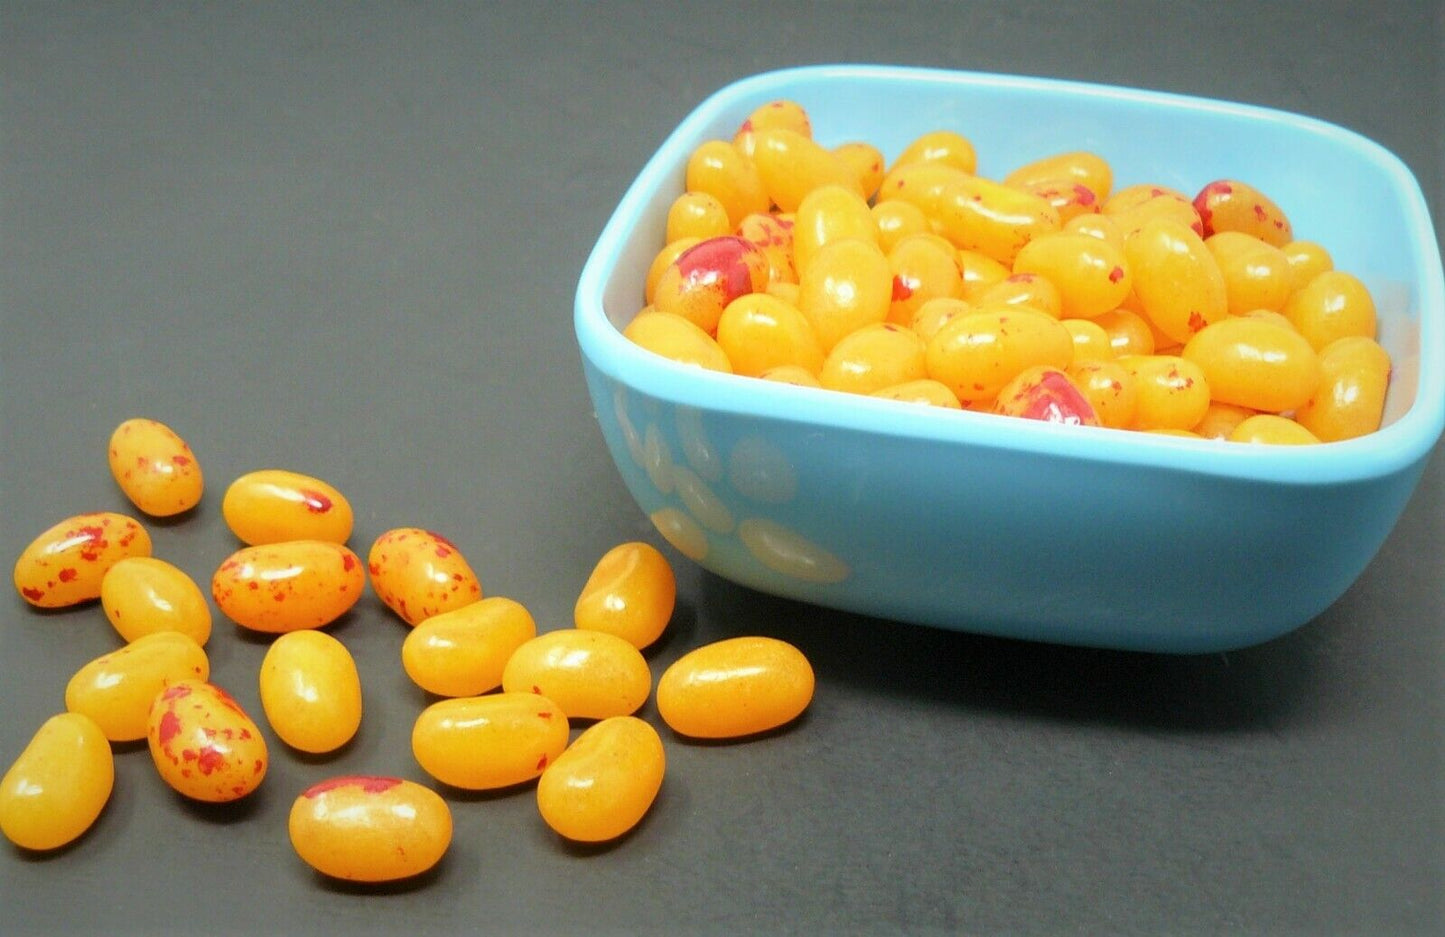 Peach Jelly Beans